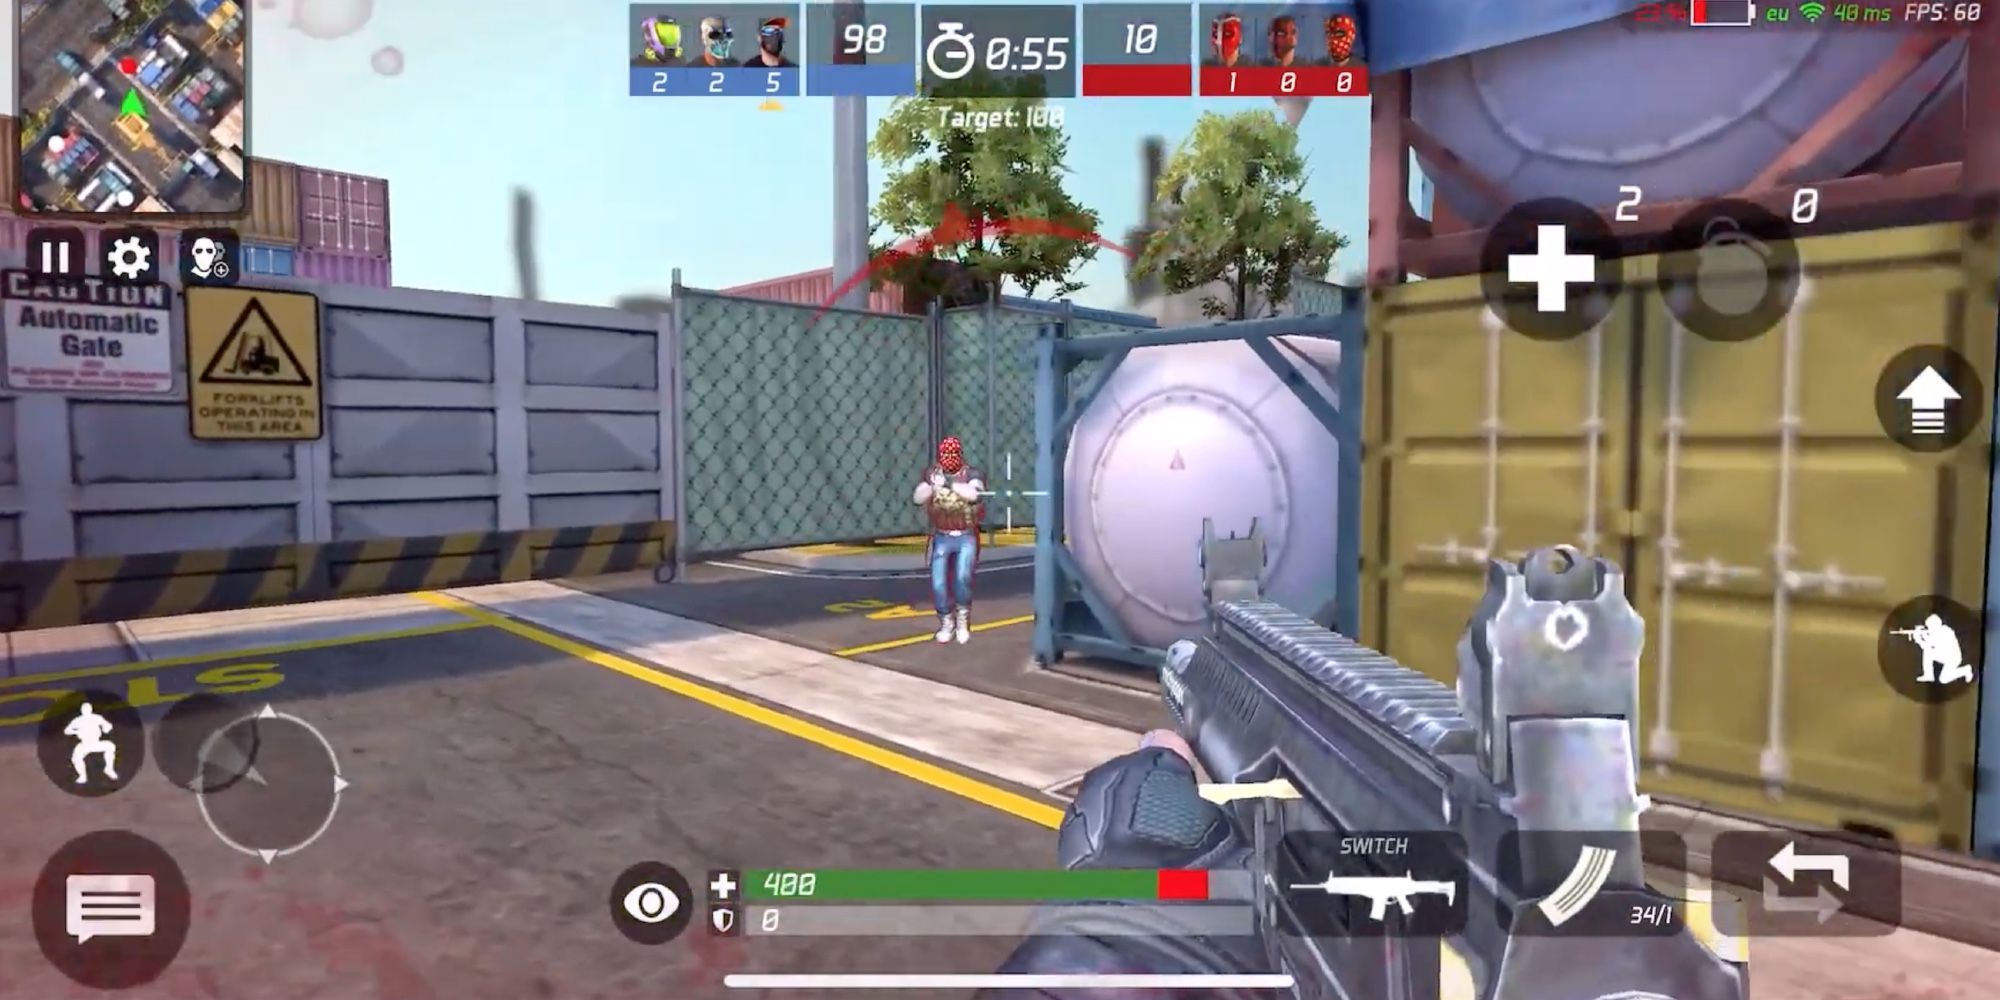 FPS Games on Mobile - MaskGun - Player shoots enemy at close-range